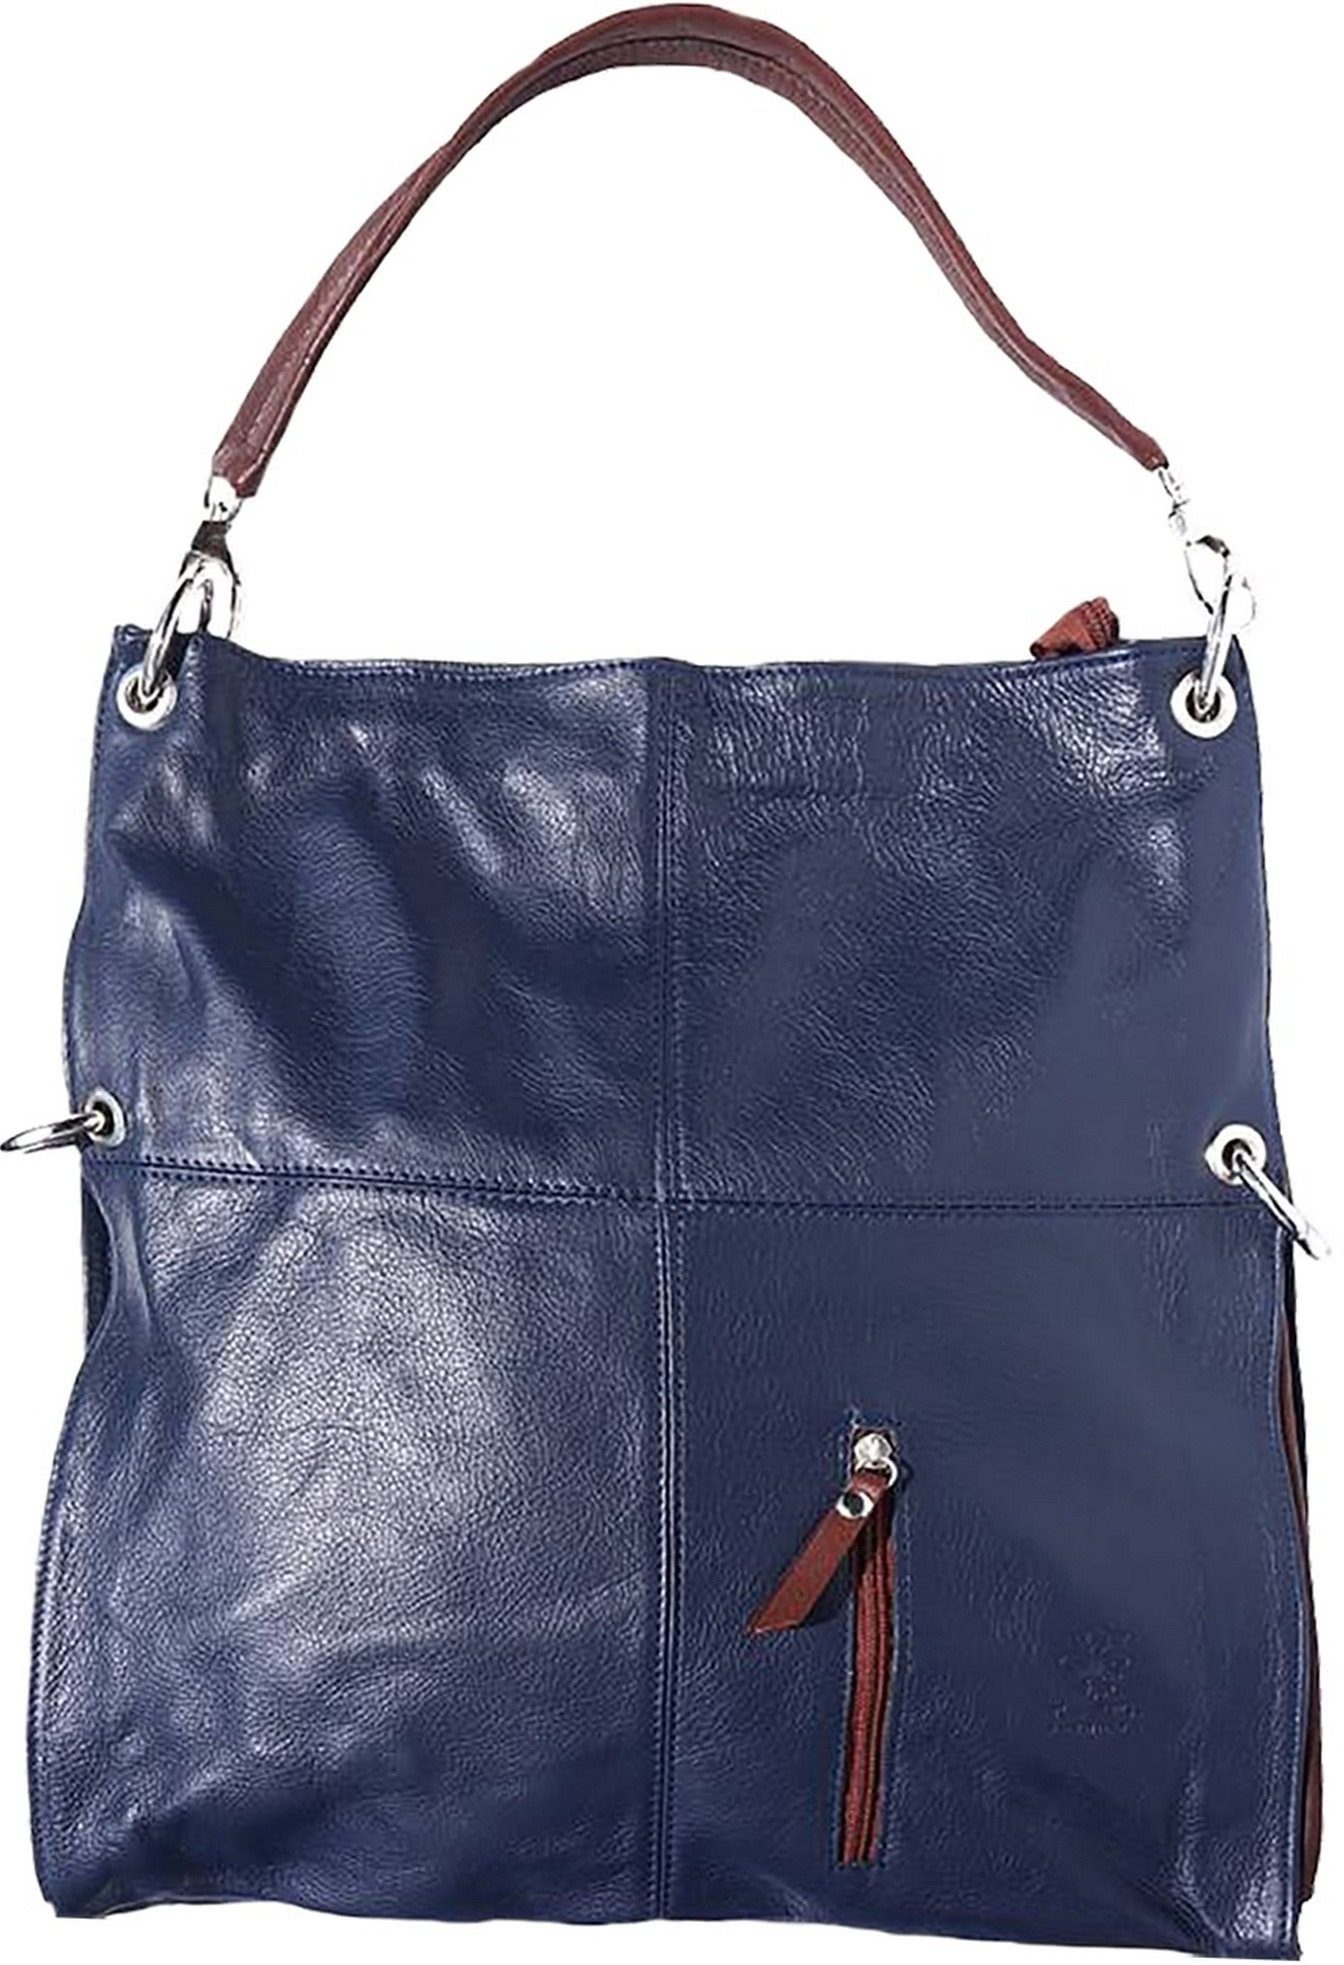 FLORENCE Schultertasche Florence Hobo Bag Echtleder Handtasche, Damen Tasche  Echtleder blau, braun, Made-In Italy